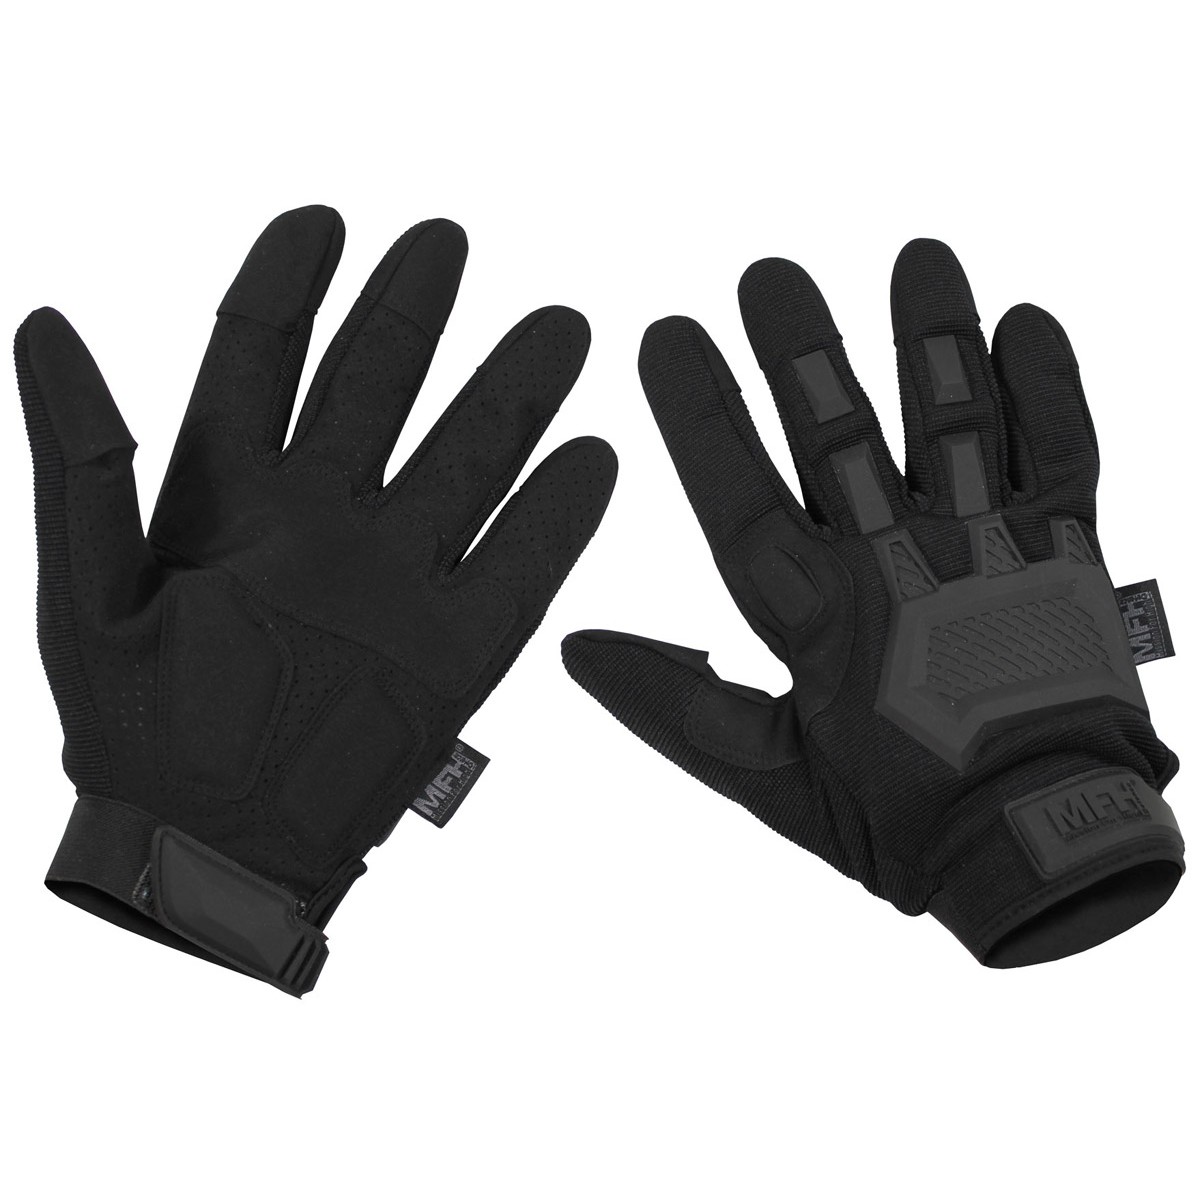 Tactical Military Shooting Profi Gloves - Black